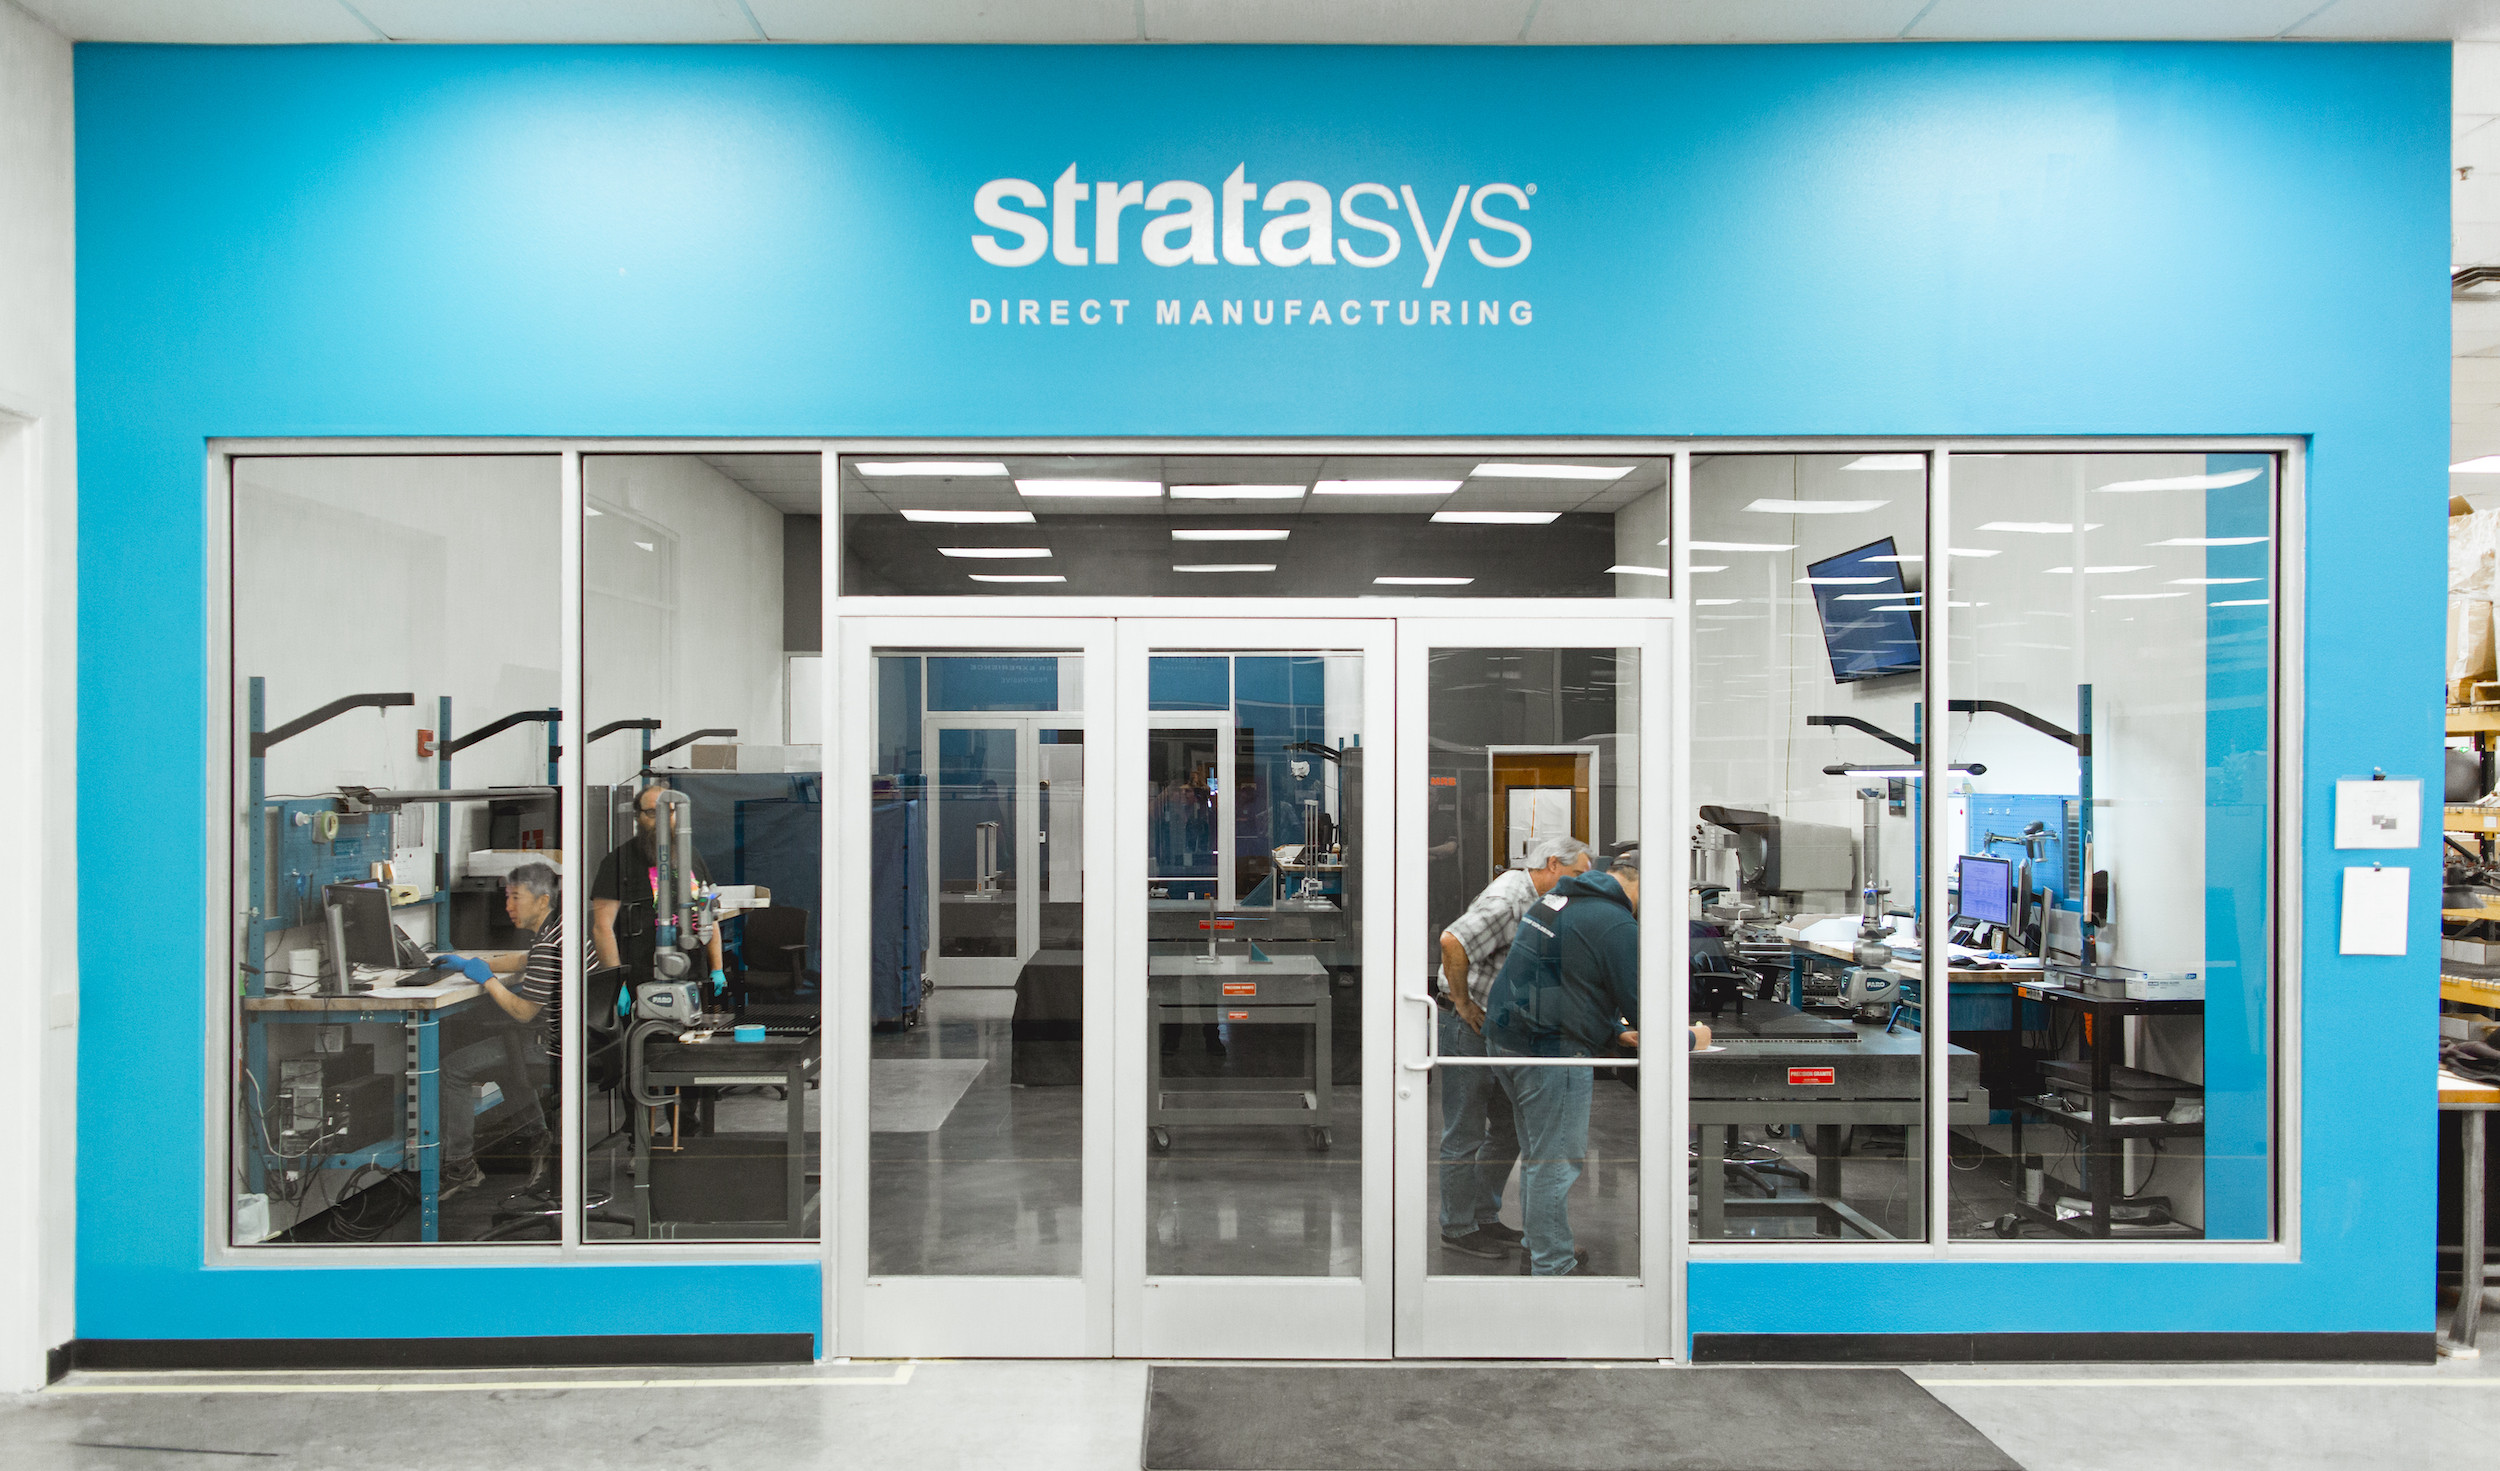 Stratasys manufacturing facility